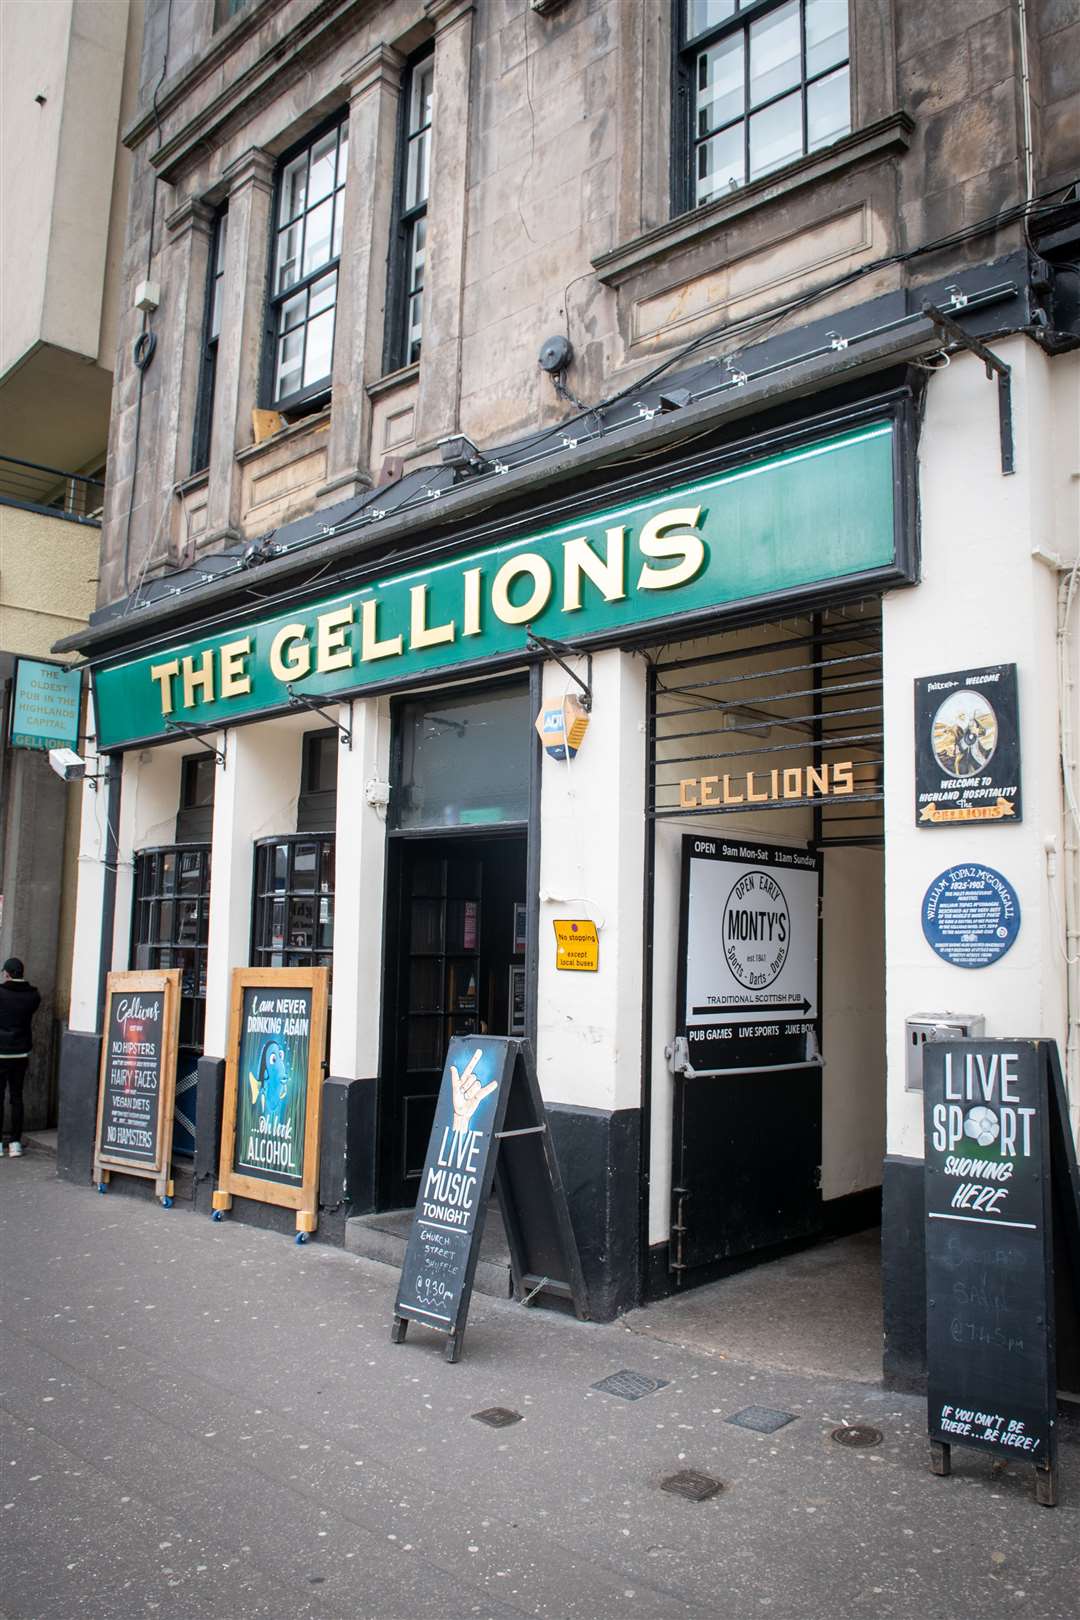 The Gellions.